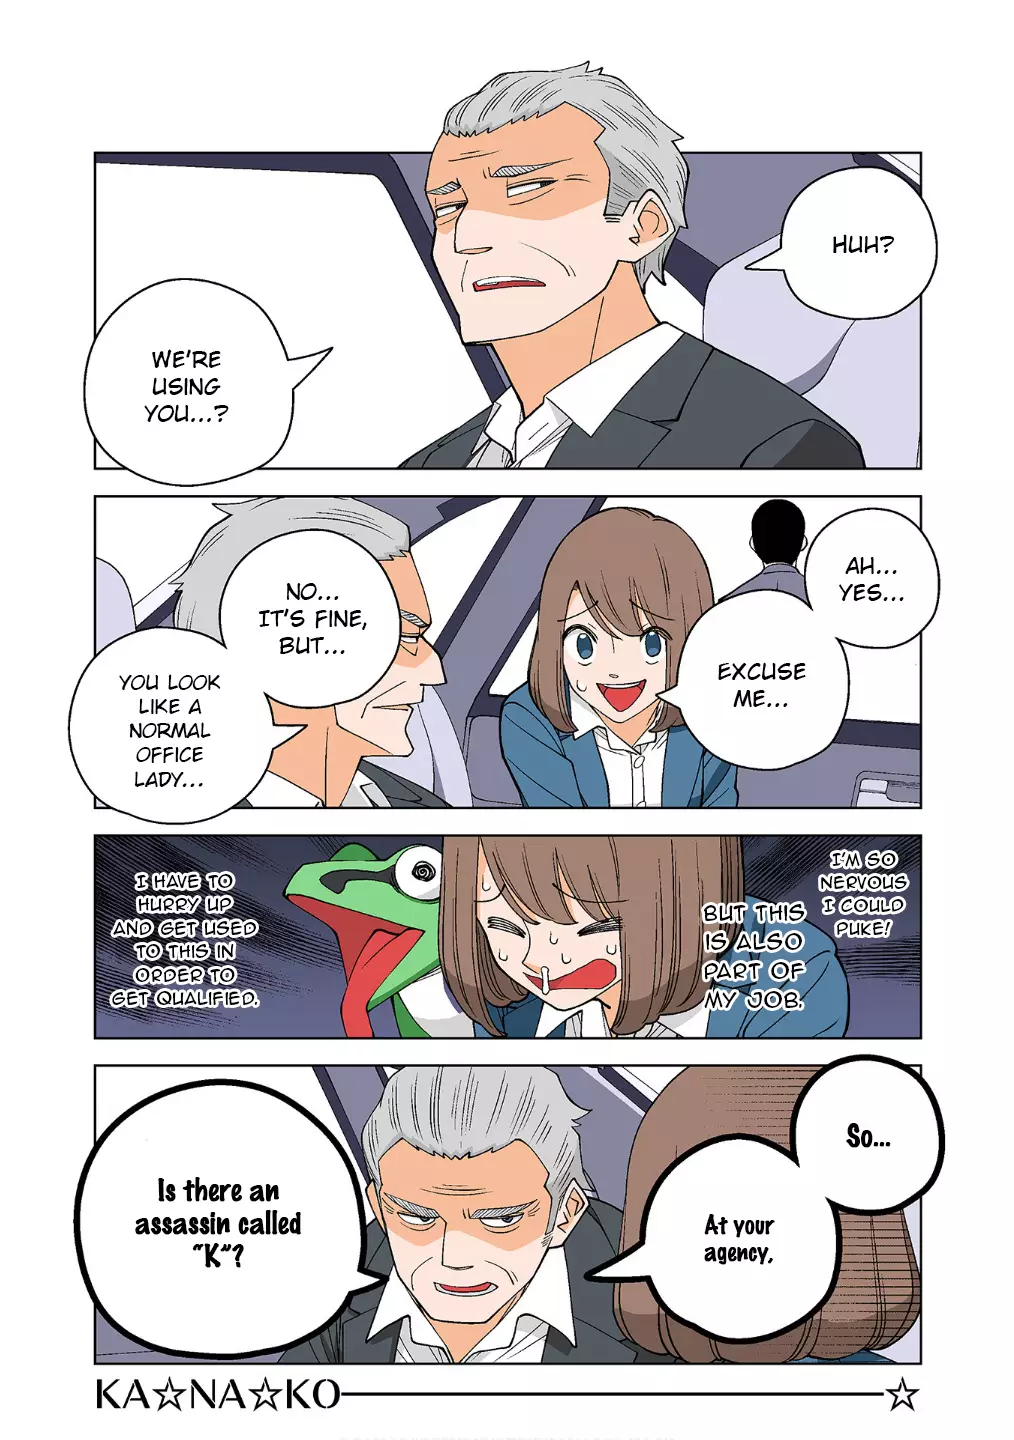 Kanako's Life As An Assassin - 13 page 2